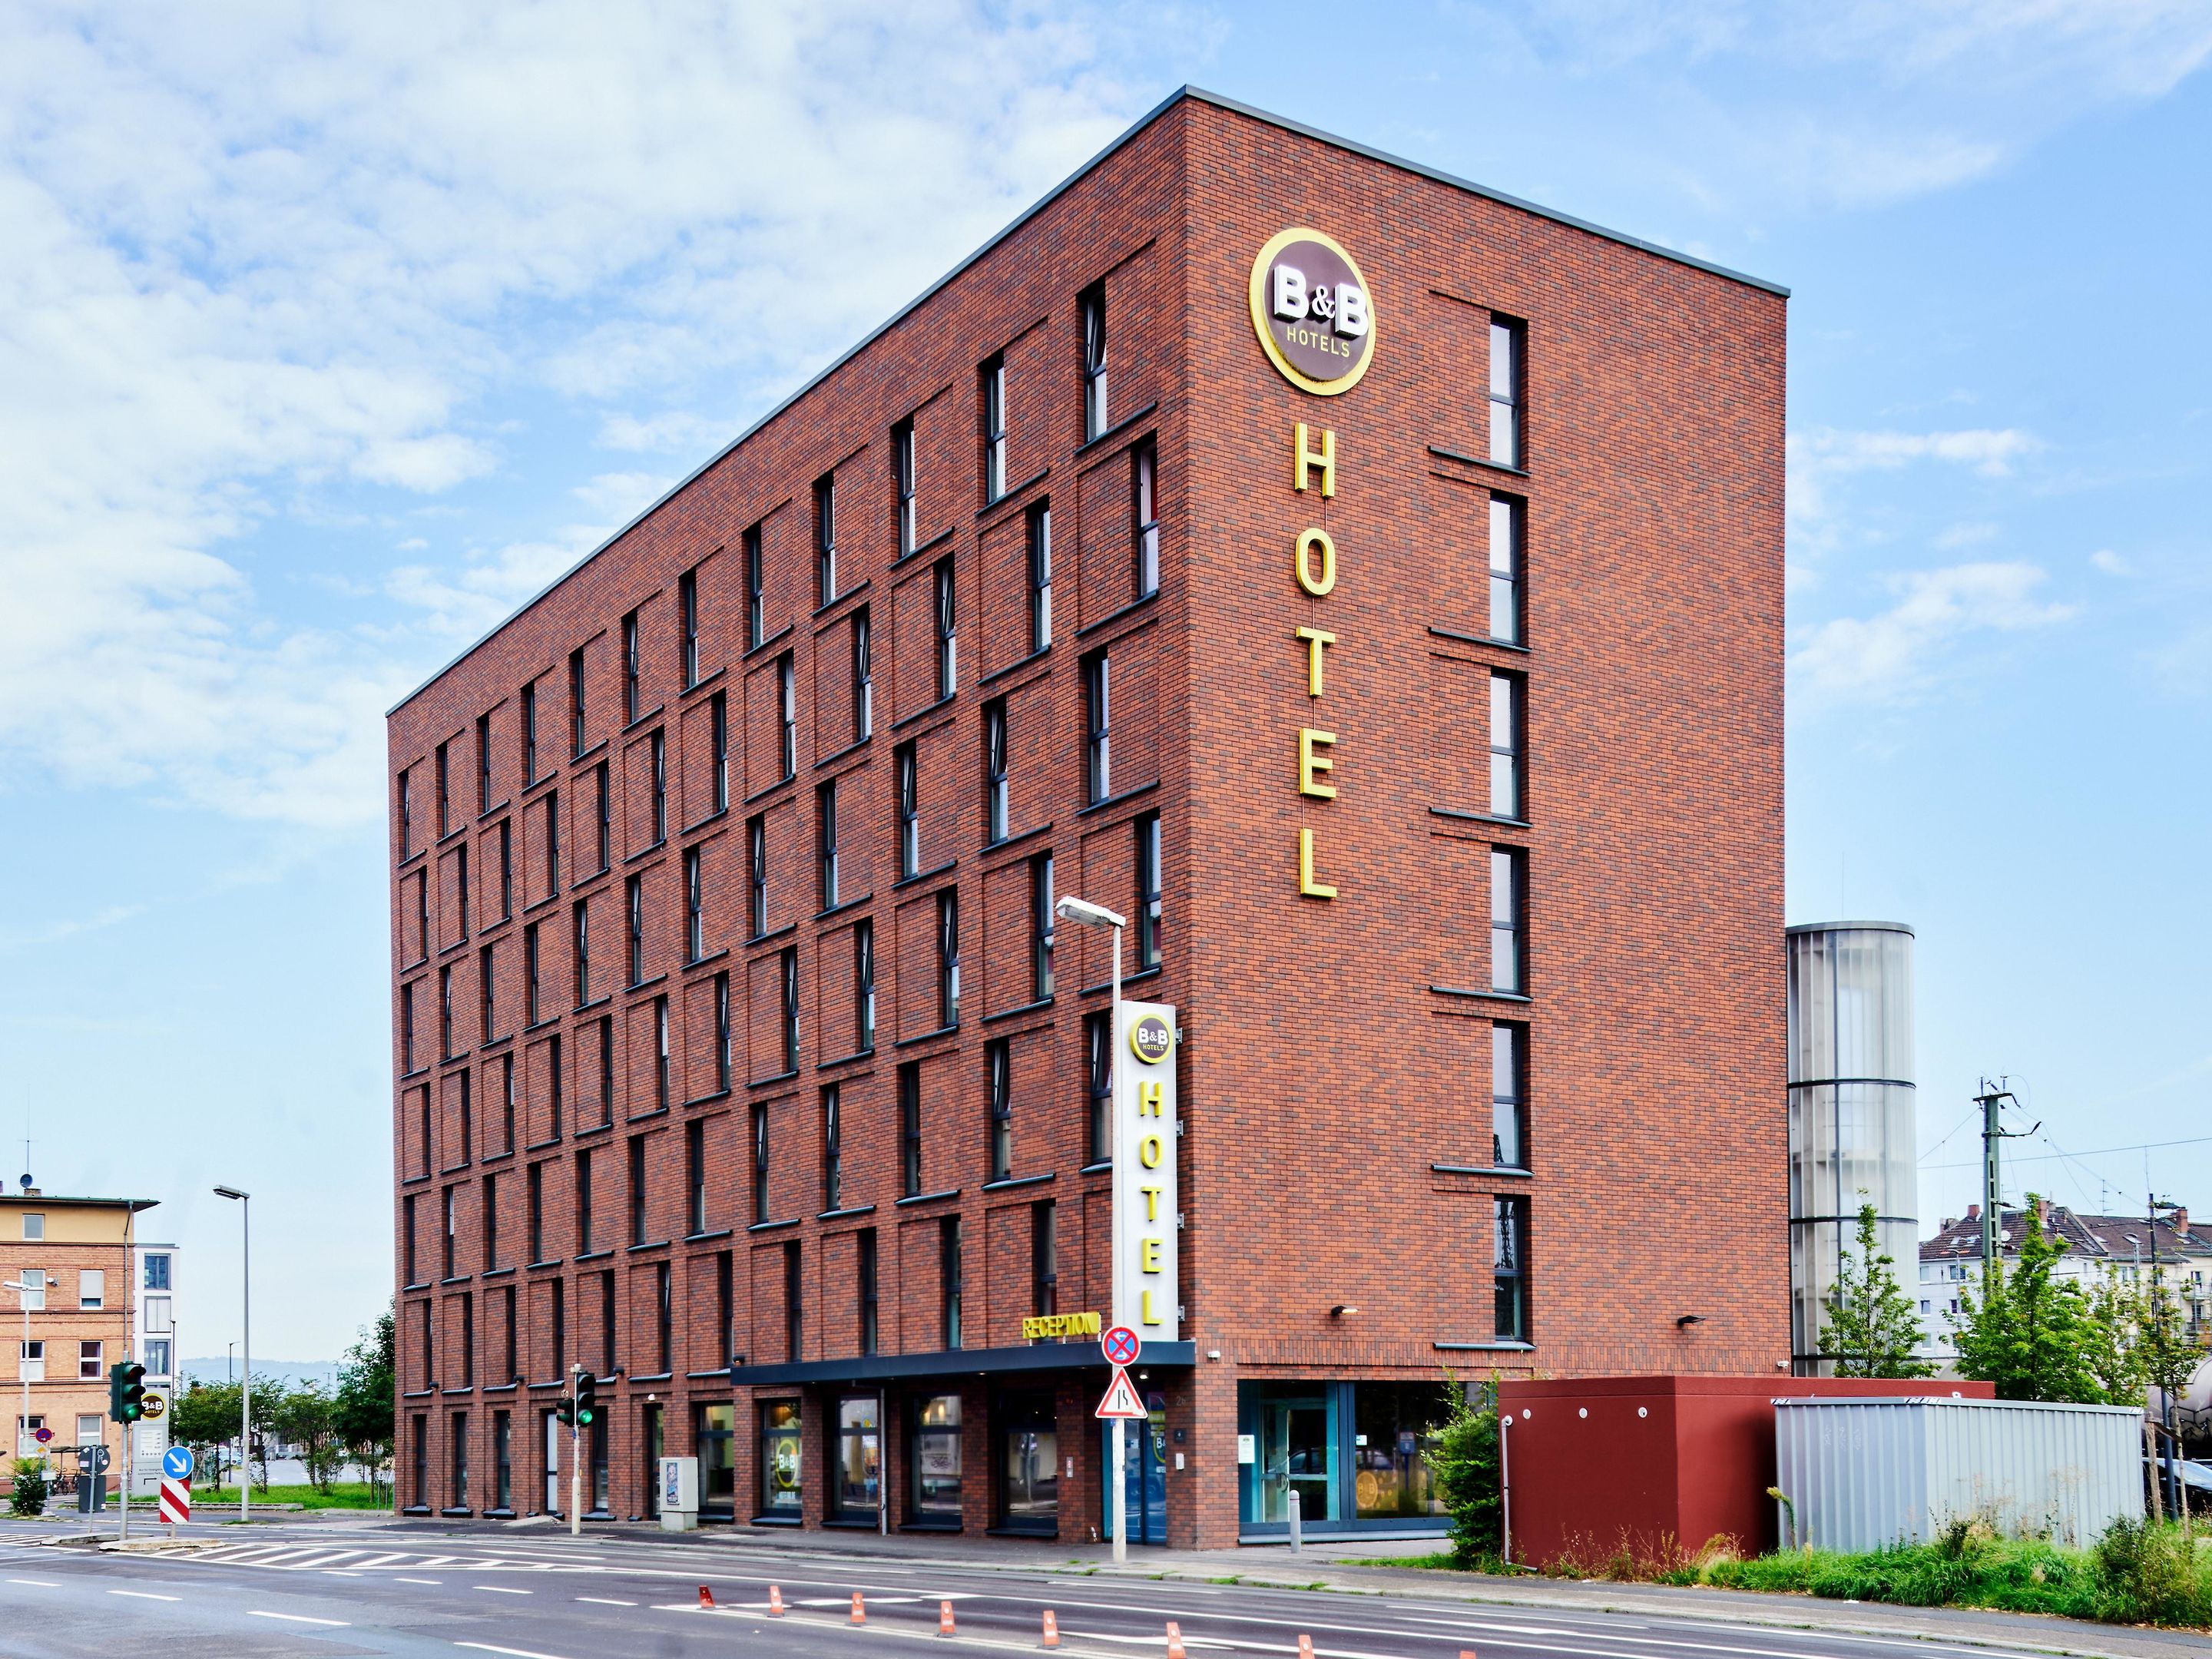 B&B HOTEL Mainz-Hbf, Mombacher Straße 2b in Mainz